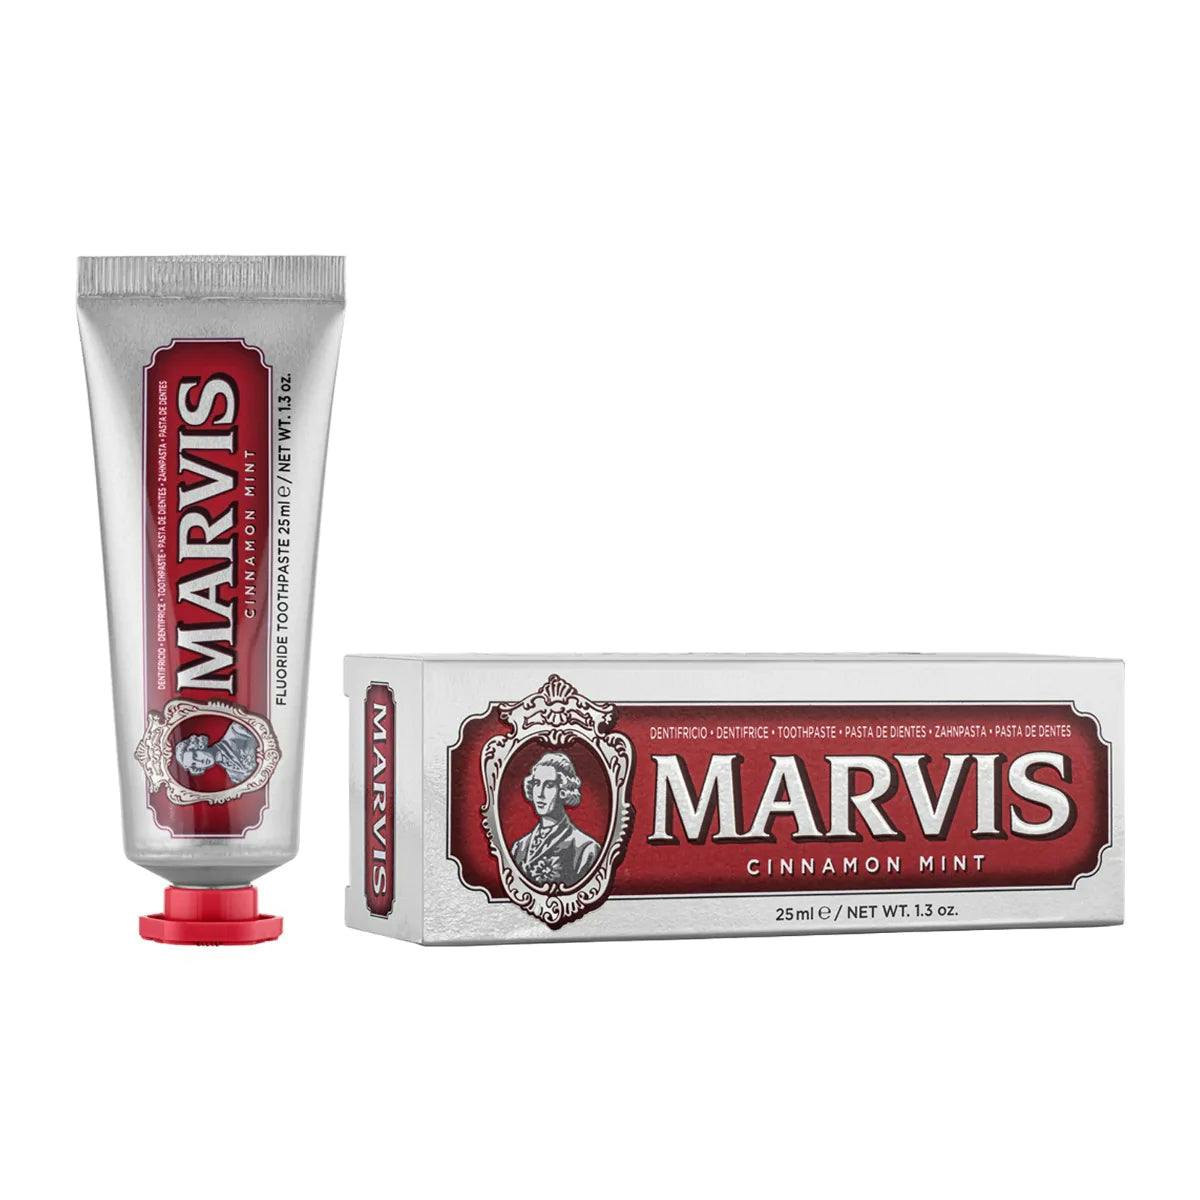 Marvis Travel Size Cinnamon Mint Toothpaste 25ml